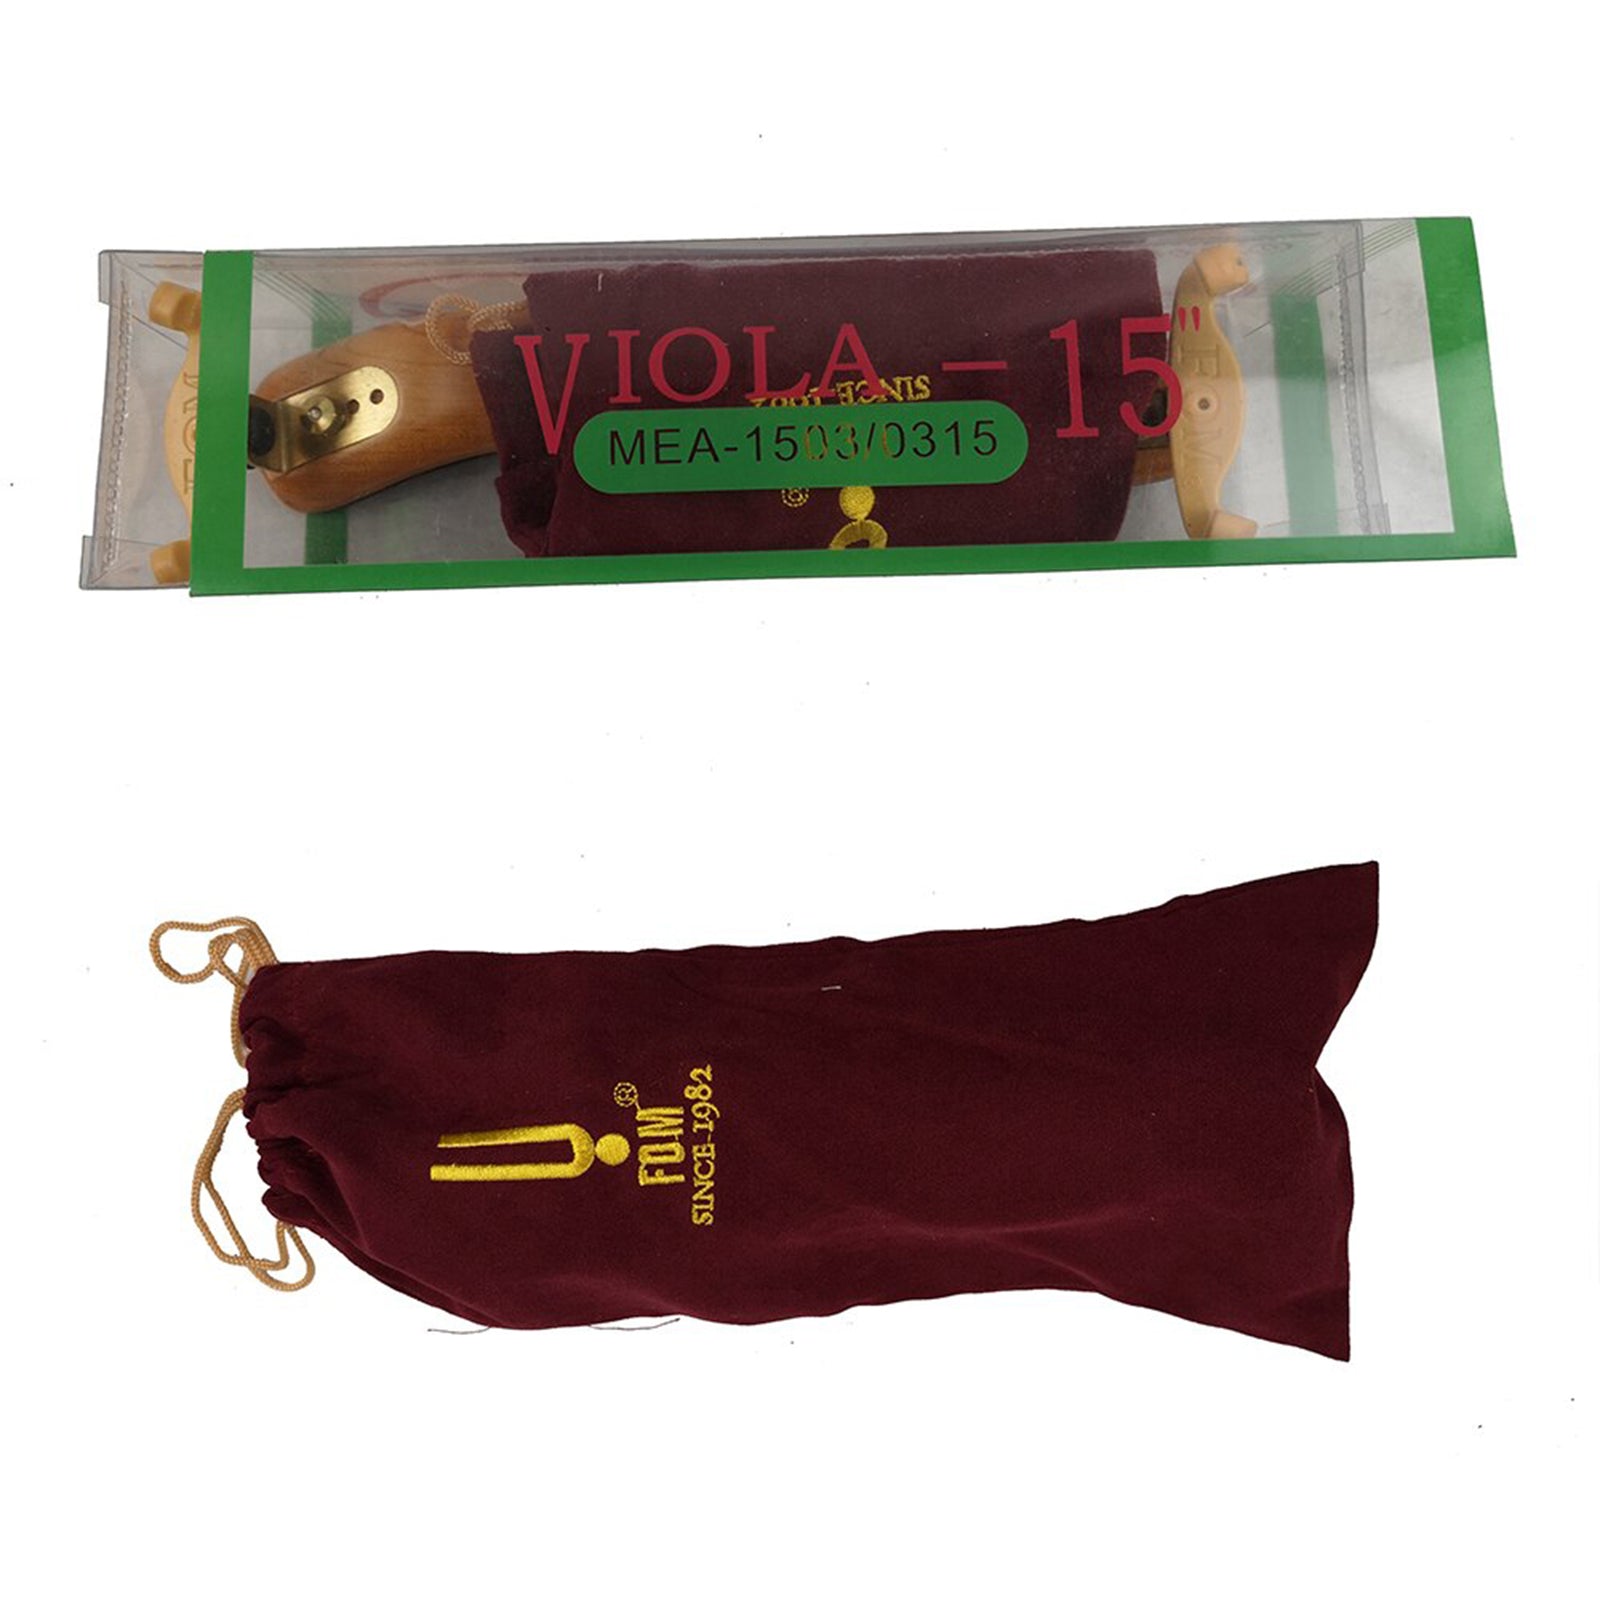 FOM Classic Viola Shoulder Rest MEA-0315 - 15"